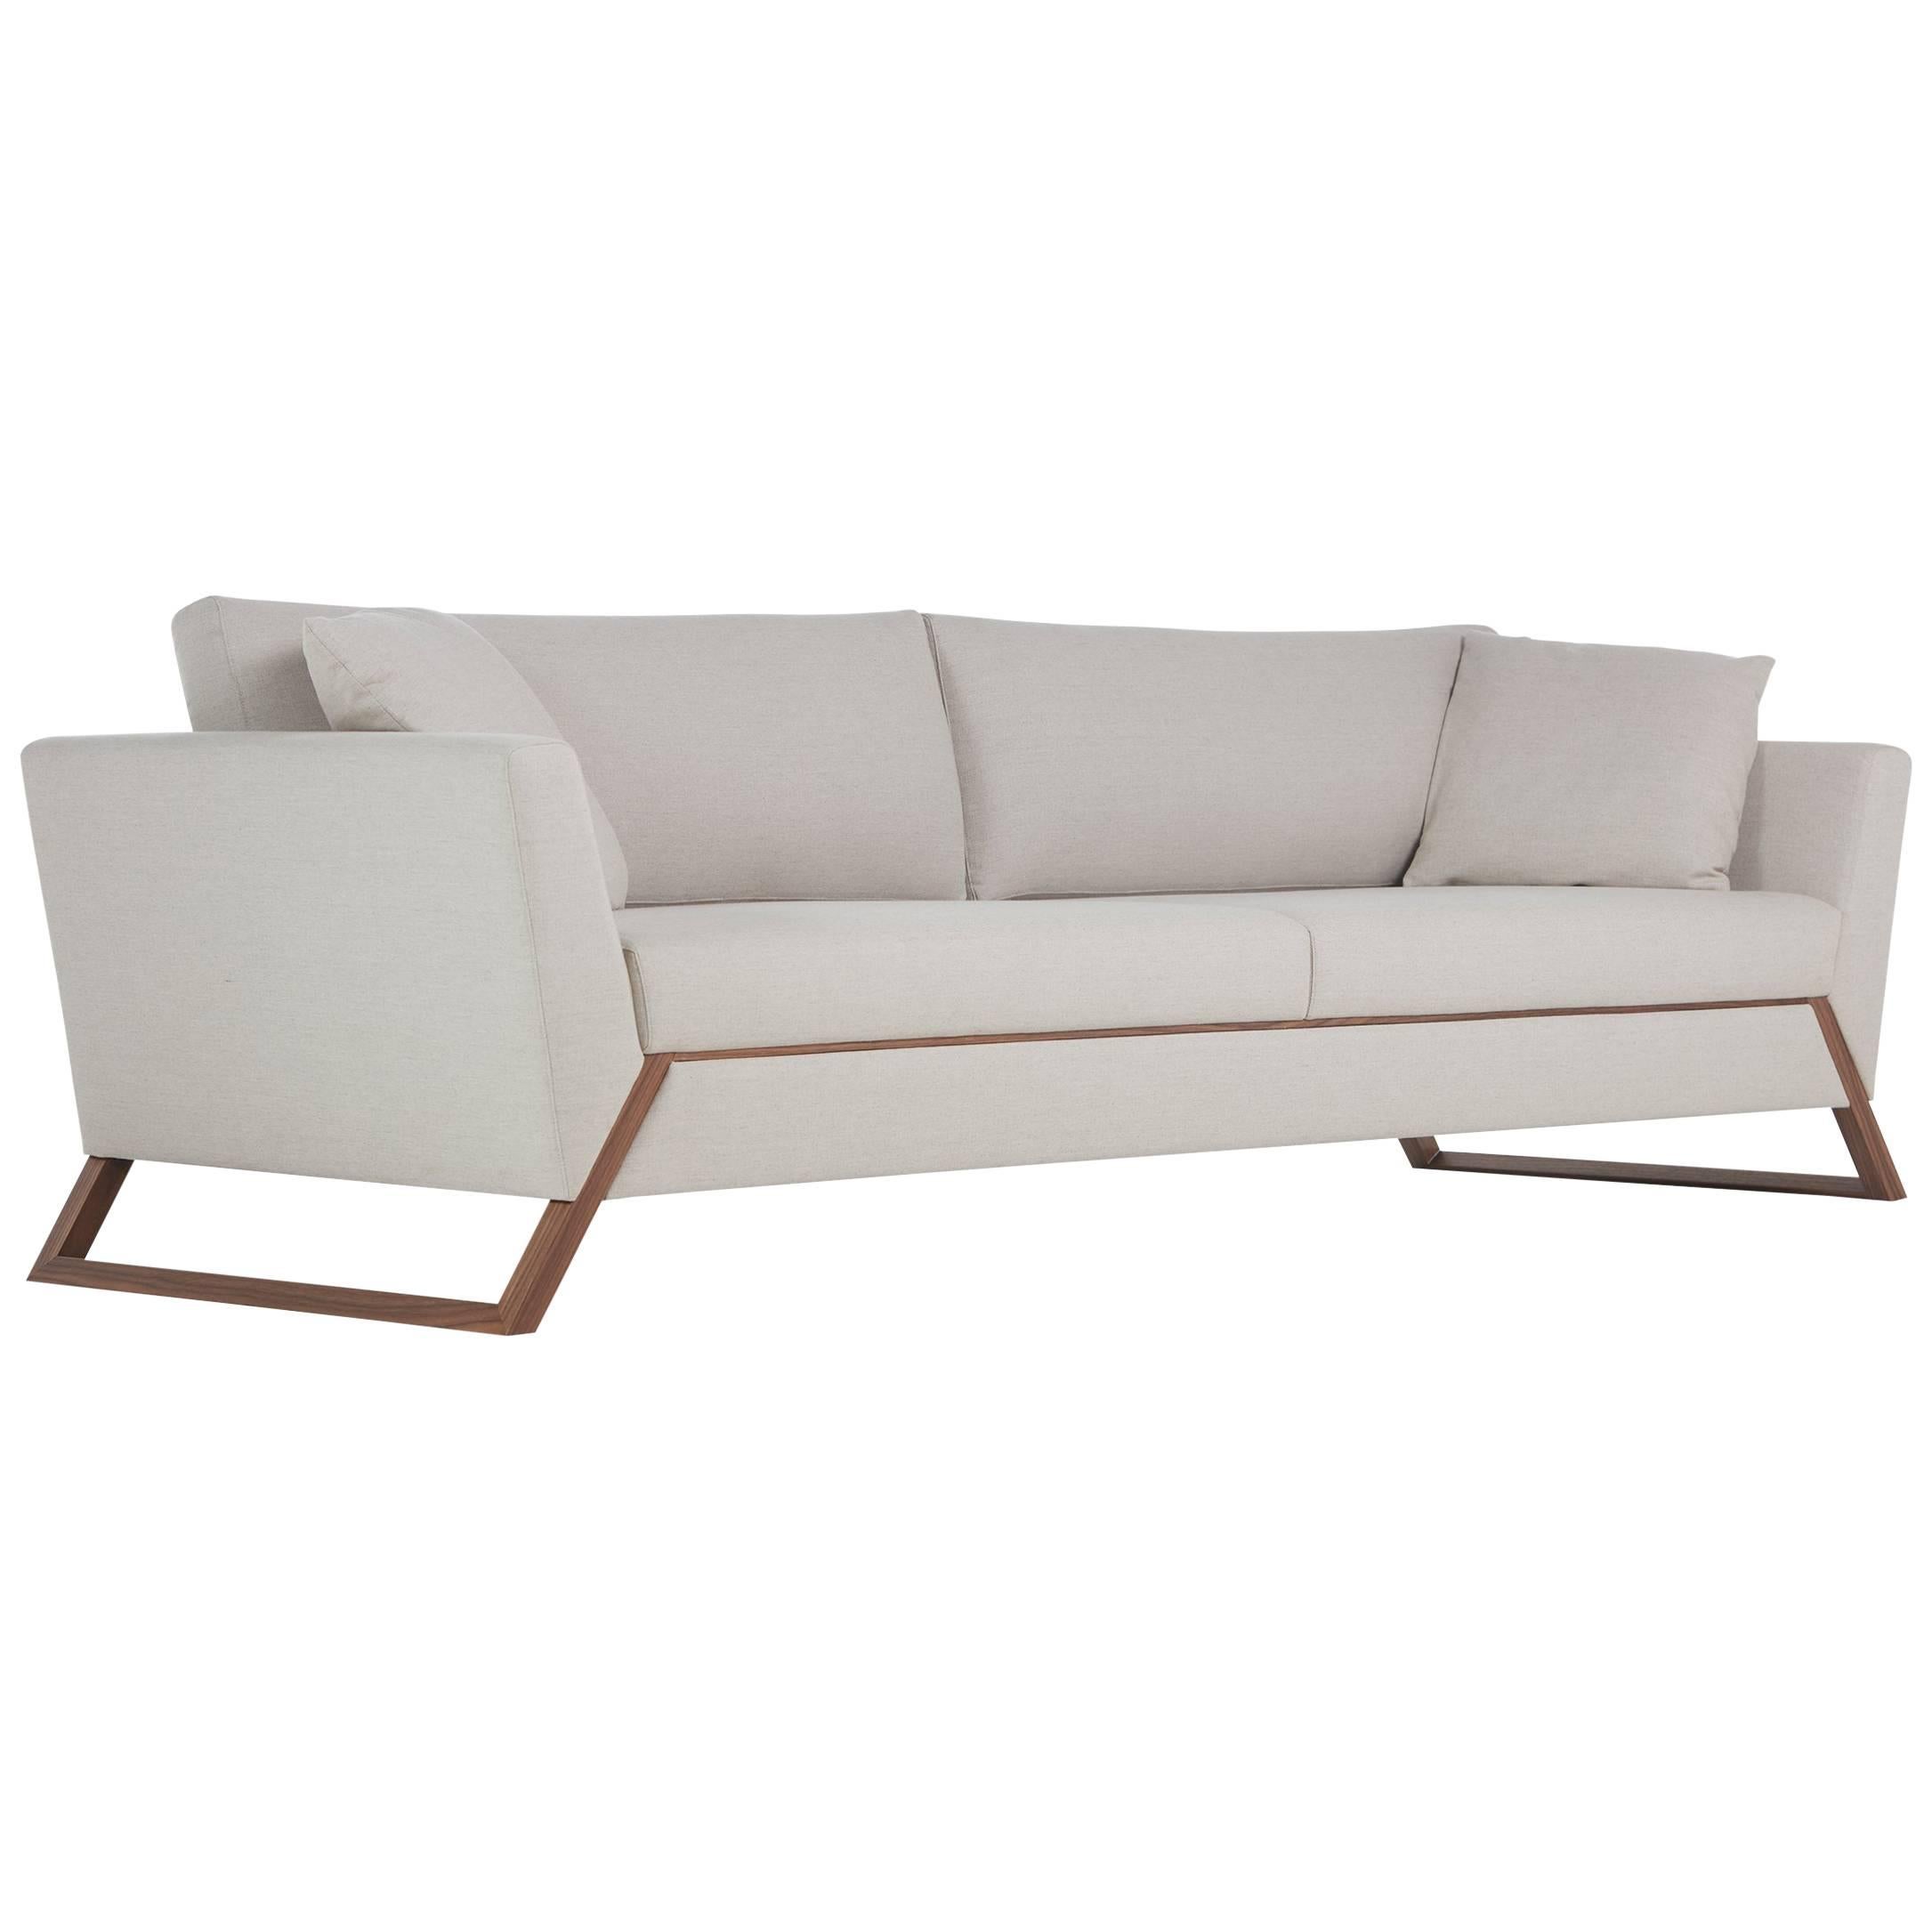 Mantiqueira Brazilian Contemporary Wood Upholstered Sofa by Lattoog